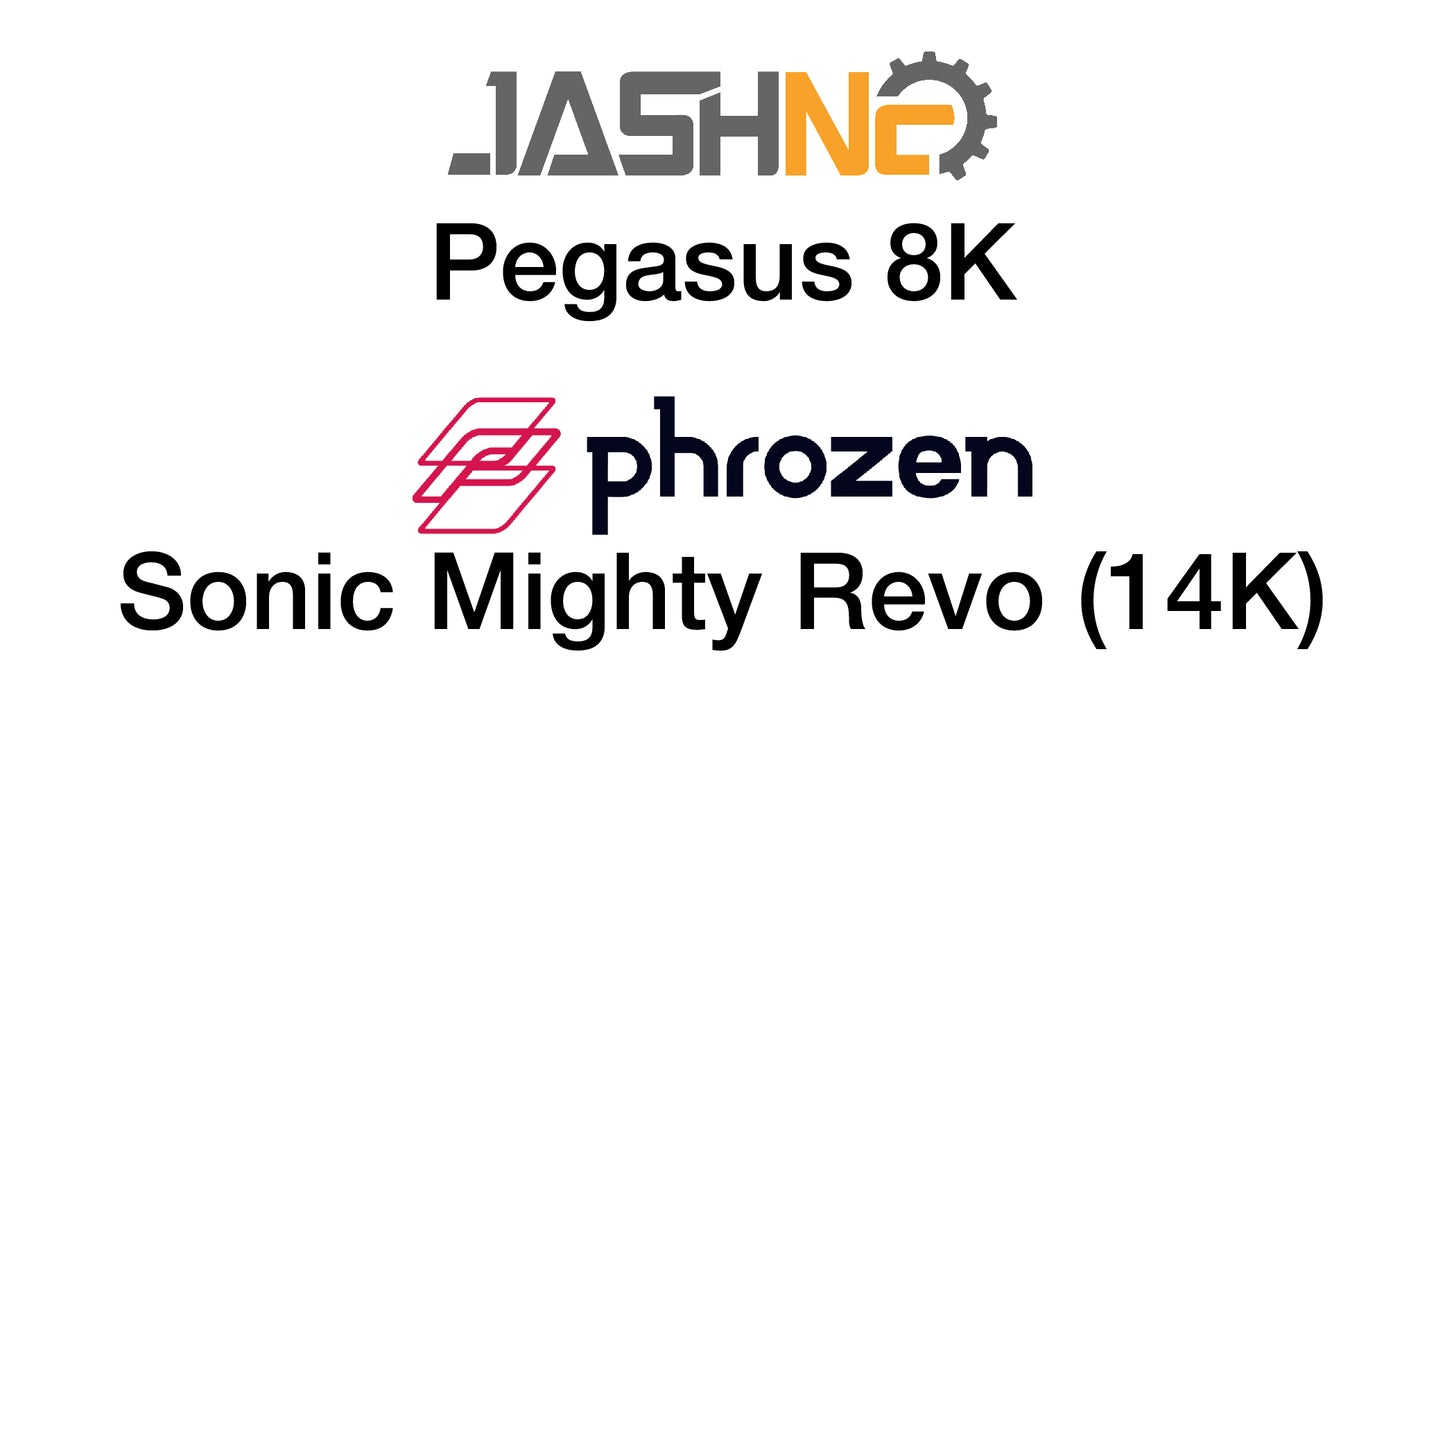 XTR Kit - Pegasus 8K and Phrozen Sonic Mighty Revo 14K - 231 x 131